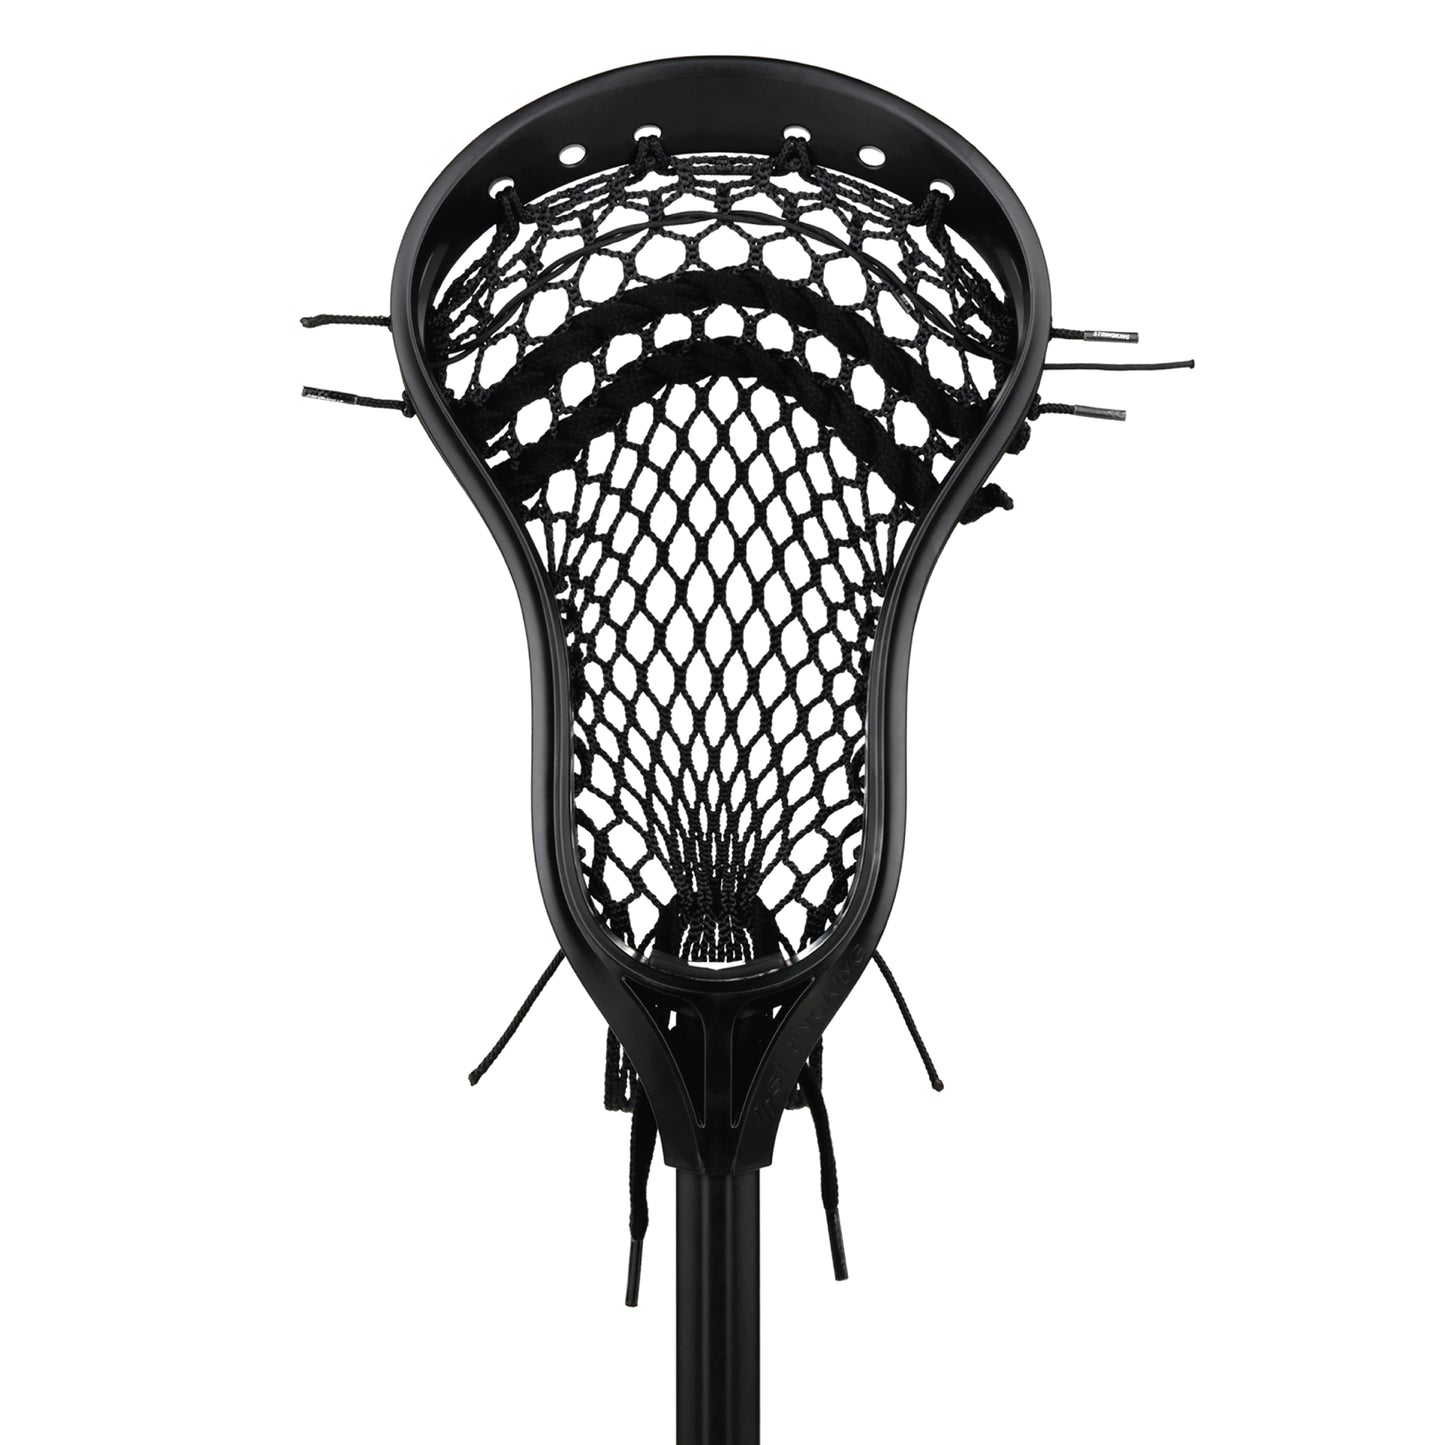 StringKing Starter Boy's Lacrosse Stick